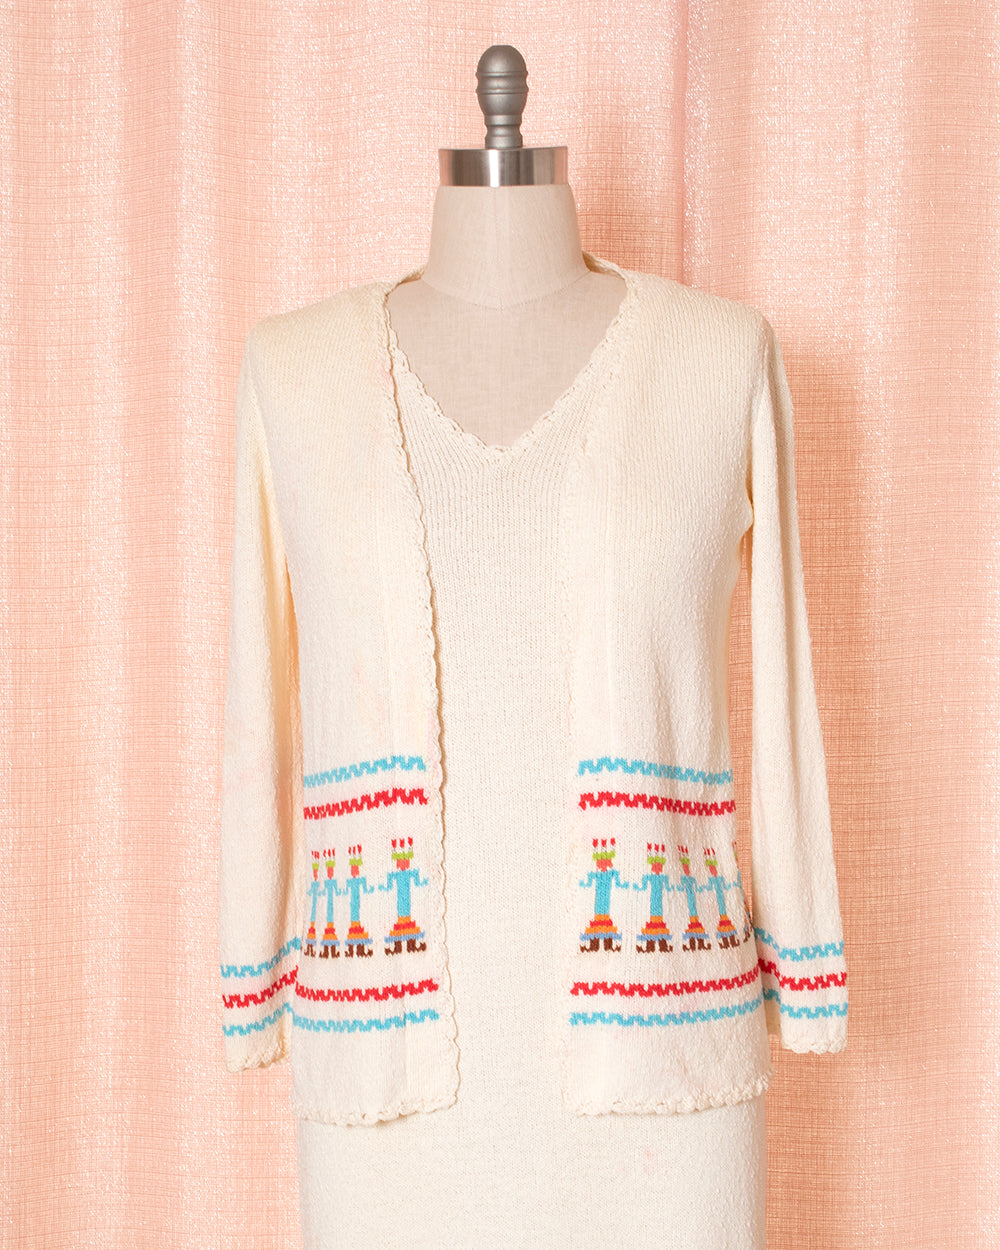 [AS-IS] 1970s Kochina Doll Novelty Border Print Knit Sweater Dress & Cardigan Set | medium/large